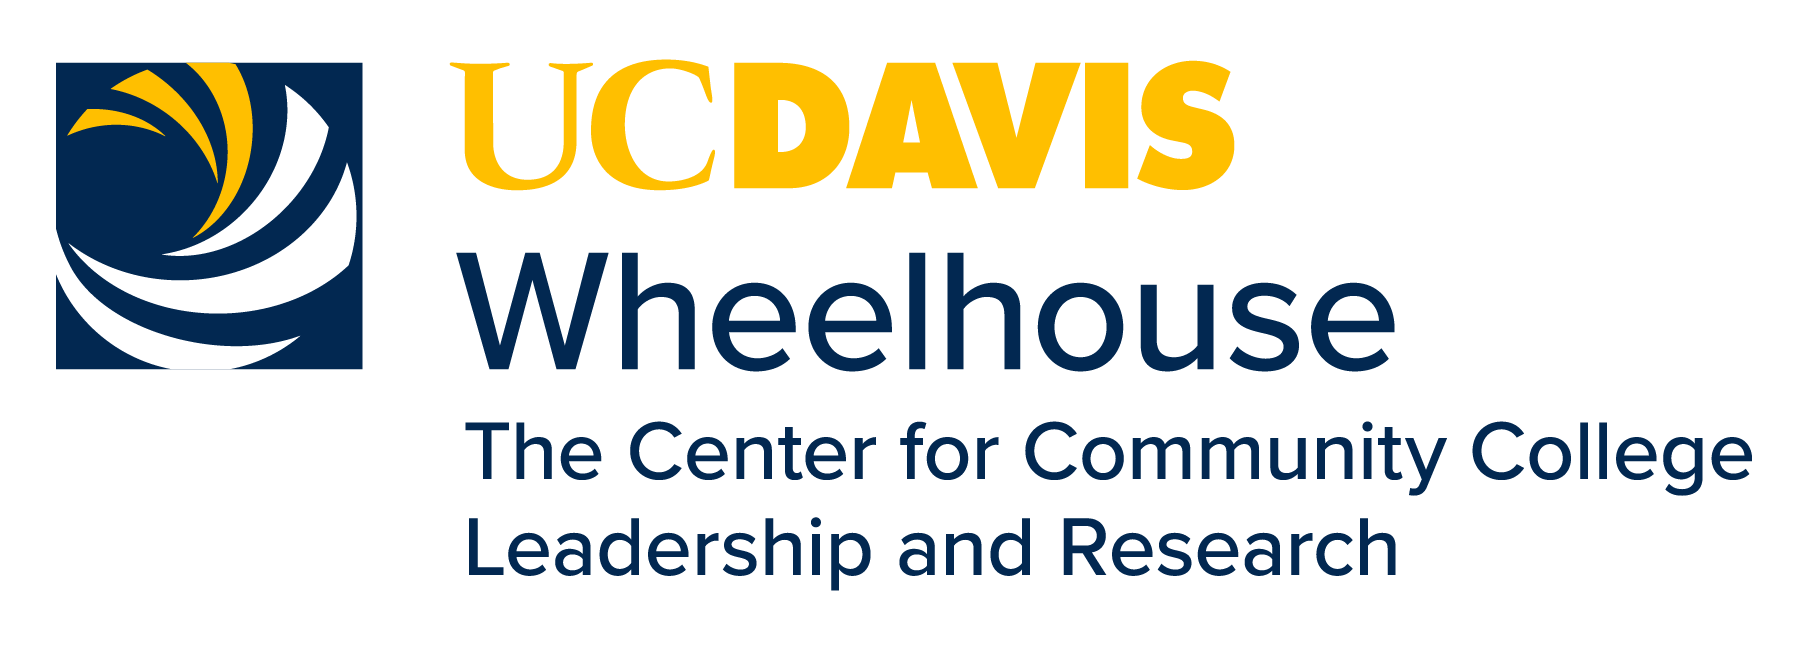 UC Davis Wheelhouse logo